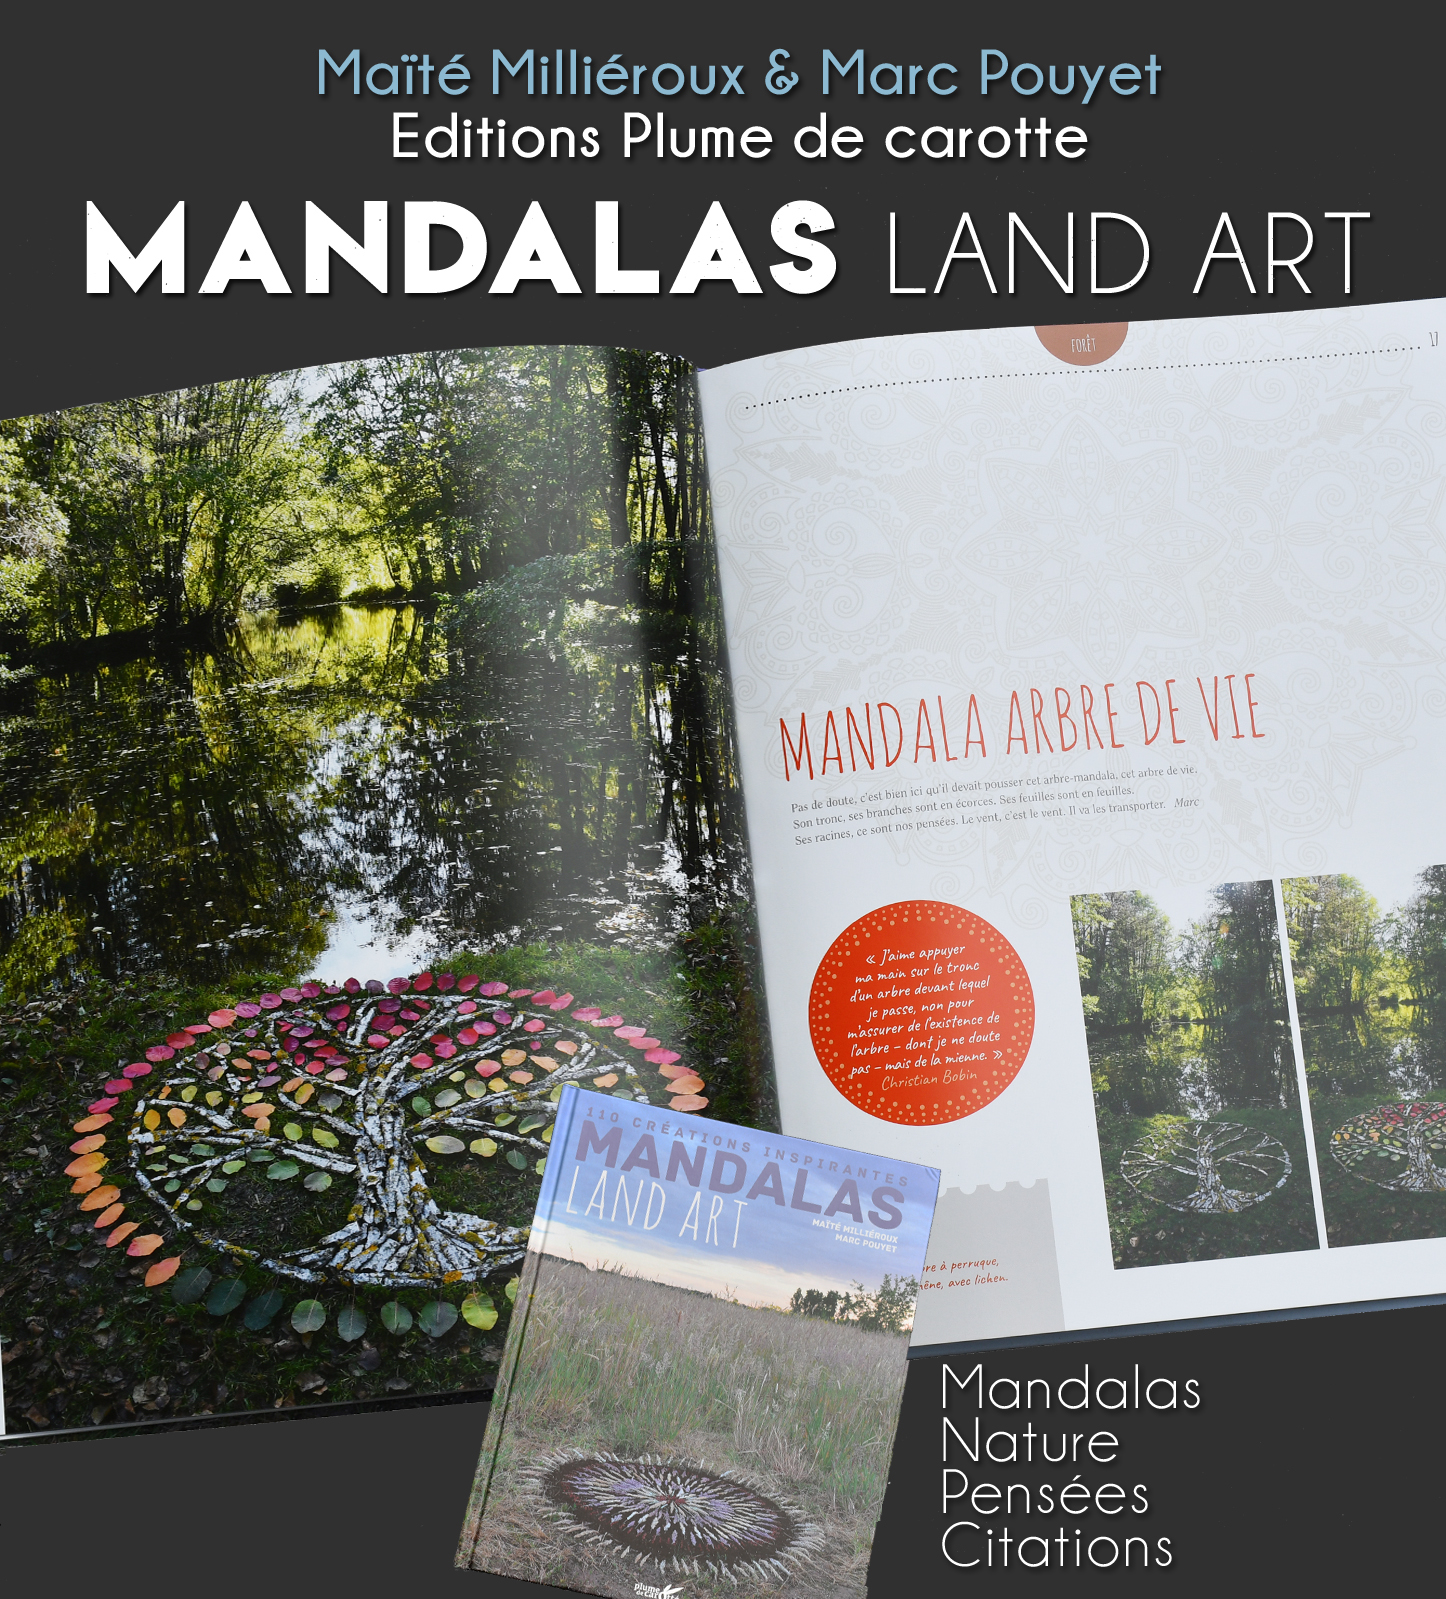 MANDALA LAND ART pub 4